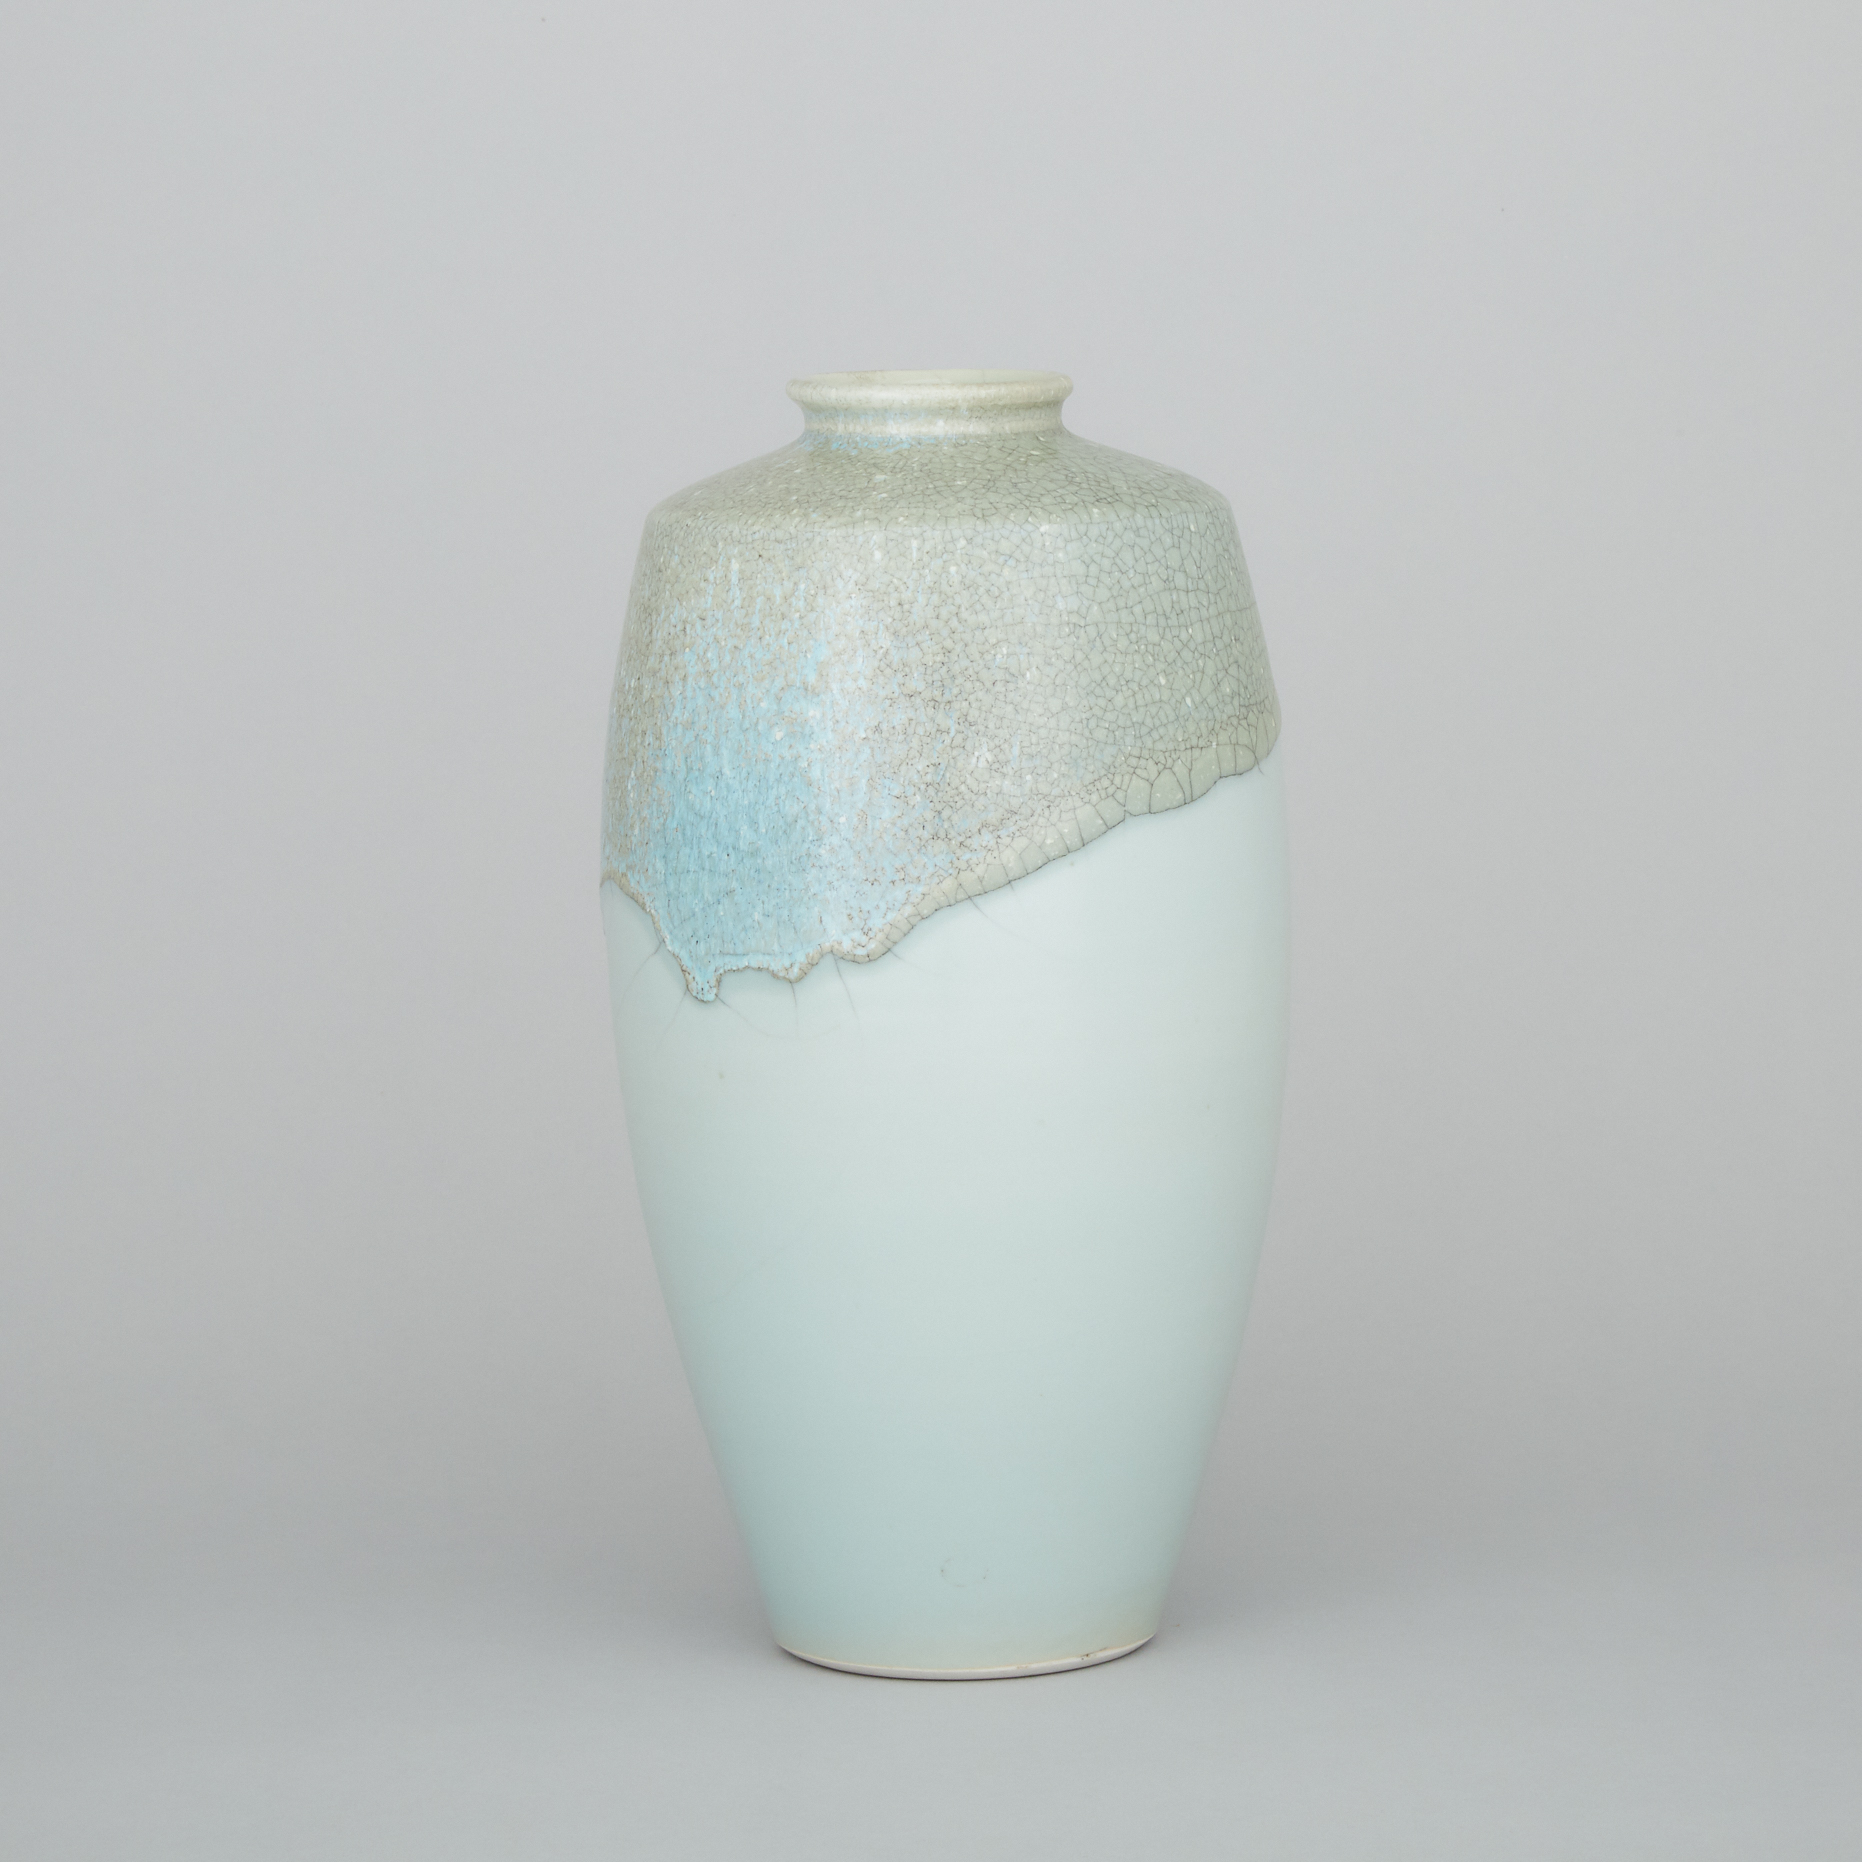 Harlan House (Canadian, b.1943), Celadon Glazed Vase, 1992